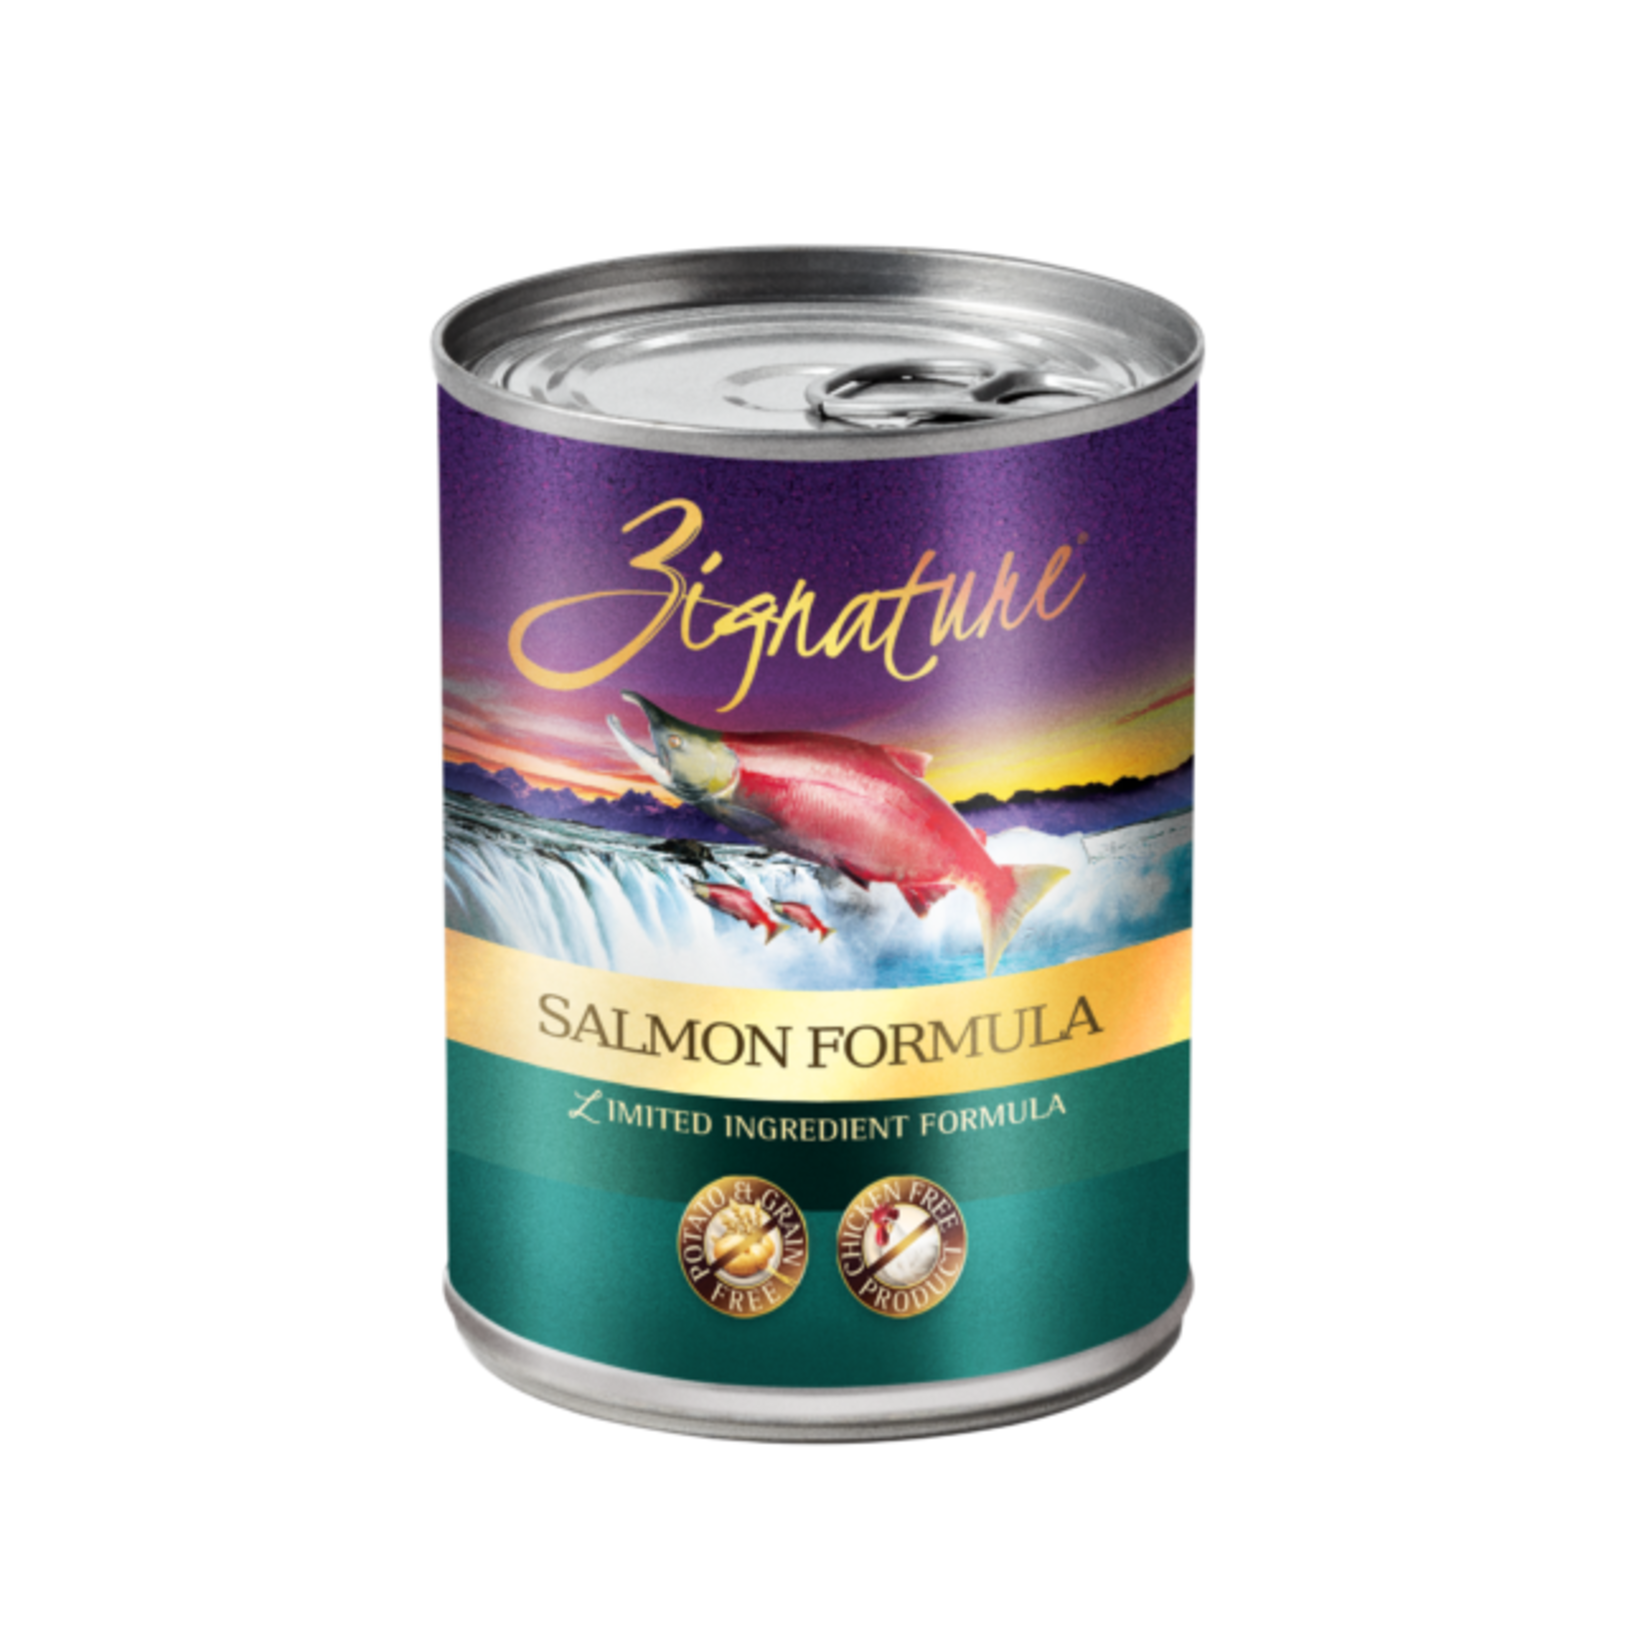 Zignature Zignature Wet Dog Food Salmon Formula 13oz Can Limited Ingredient Formula Grain Free